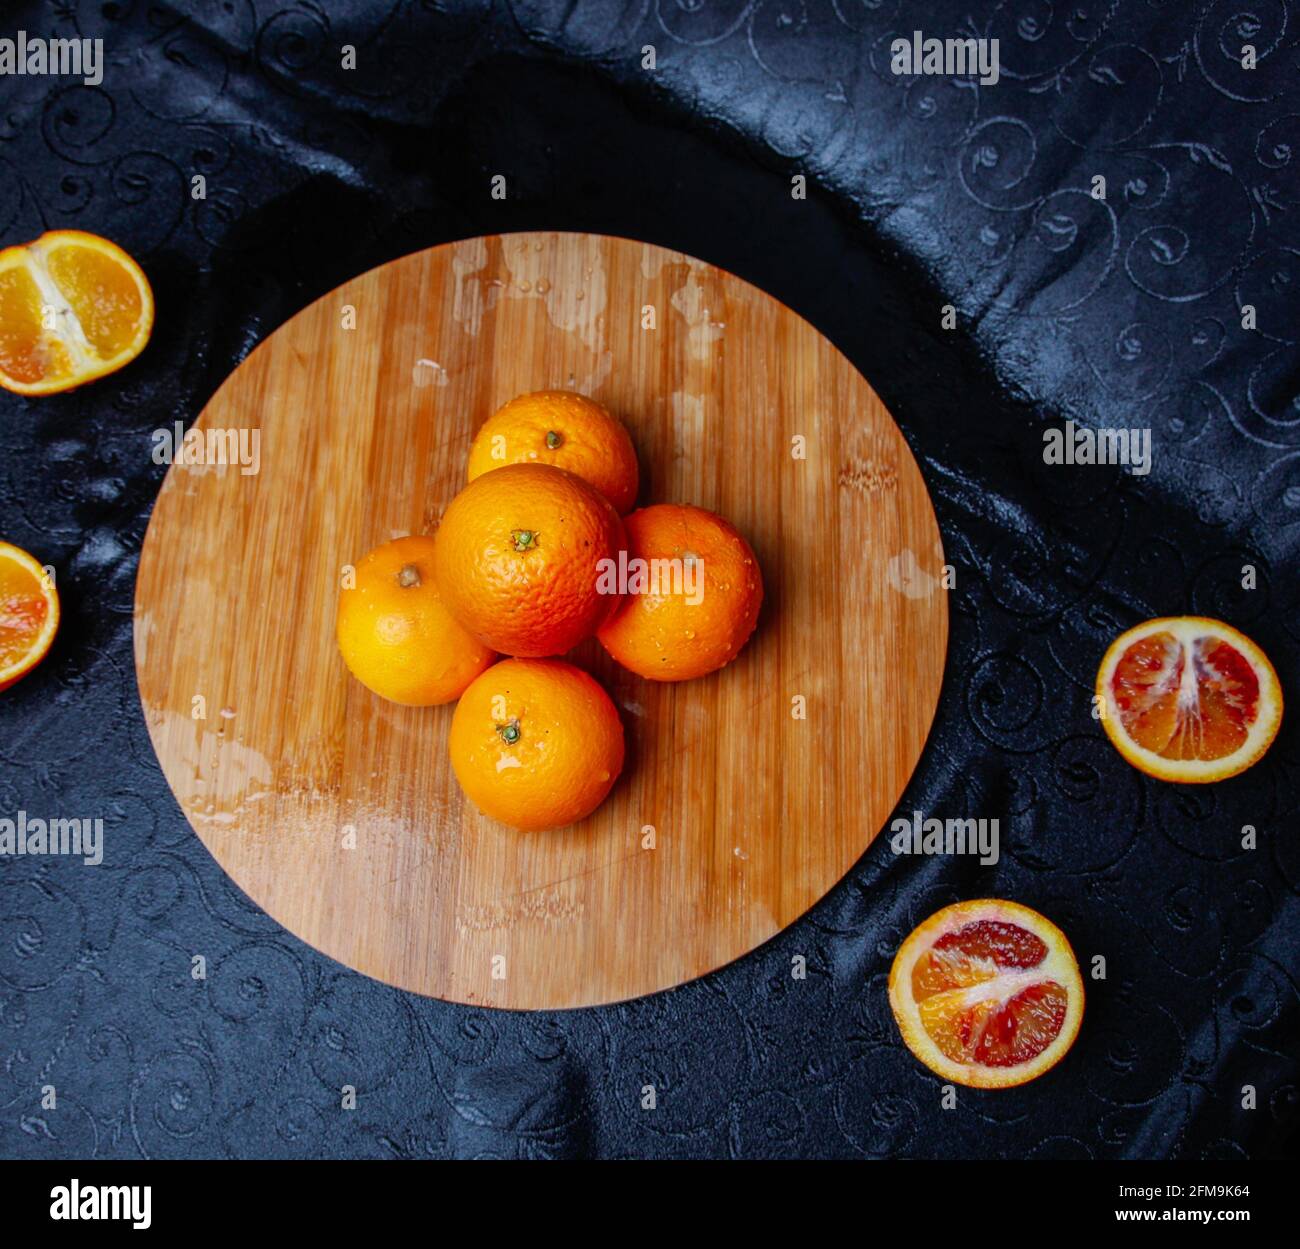 Oranges, blood oranges, vitamin C, lifestyle, food photography Stock Photo